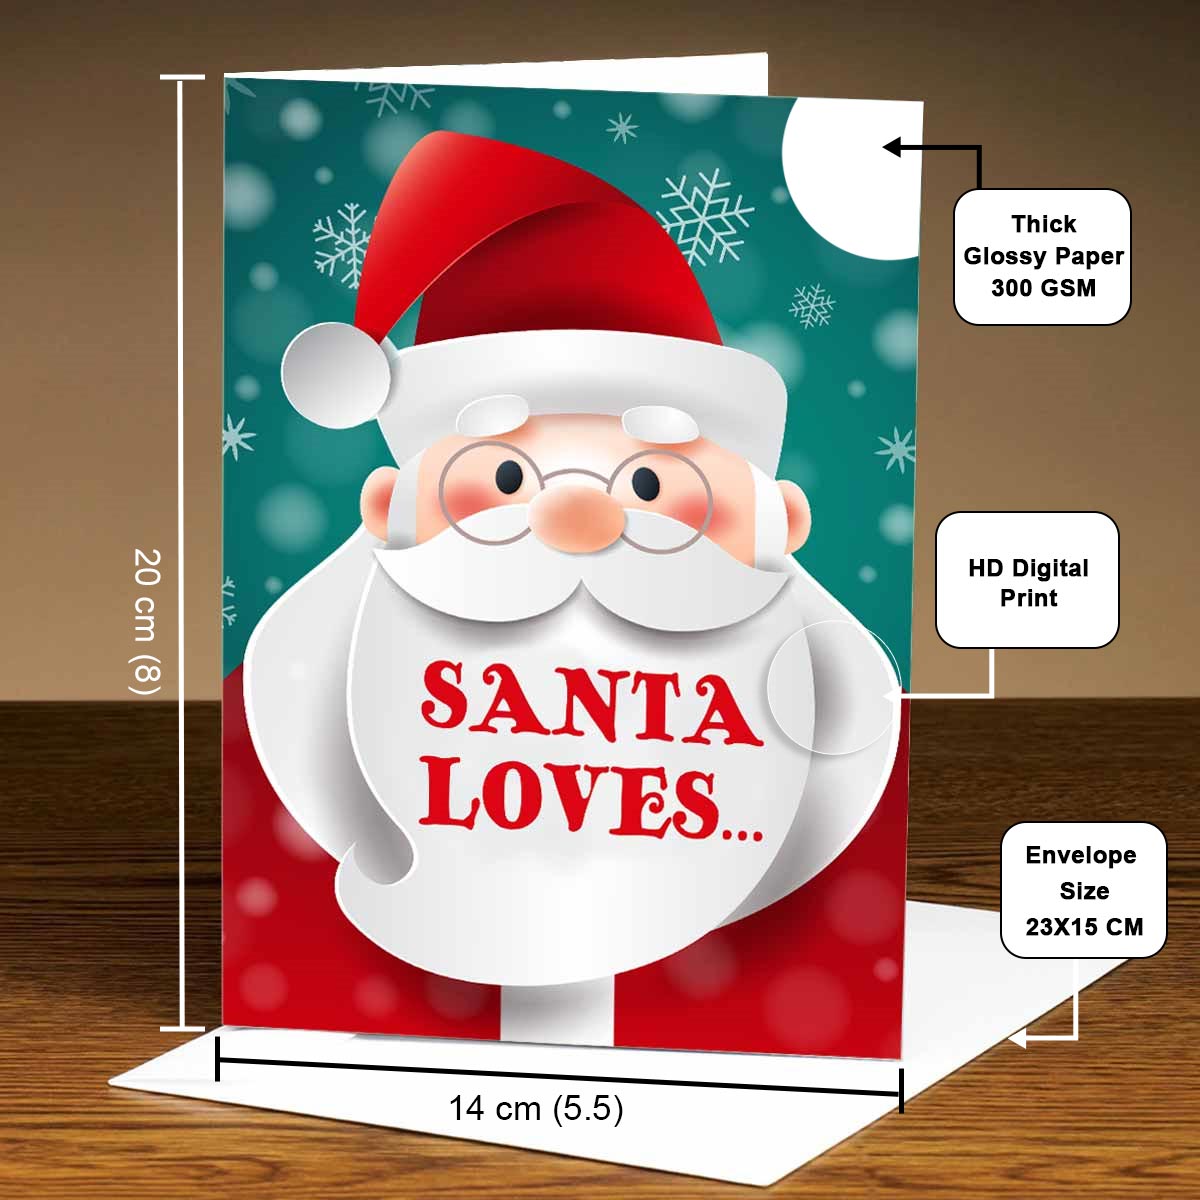 Personalised Santa Loves? Christmas Wishes Mirror Greeting Card